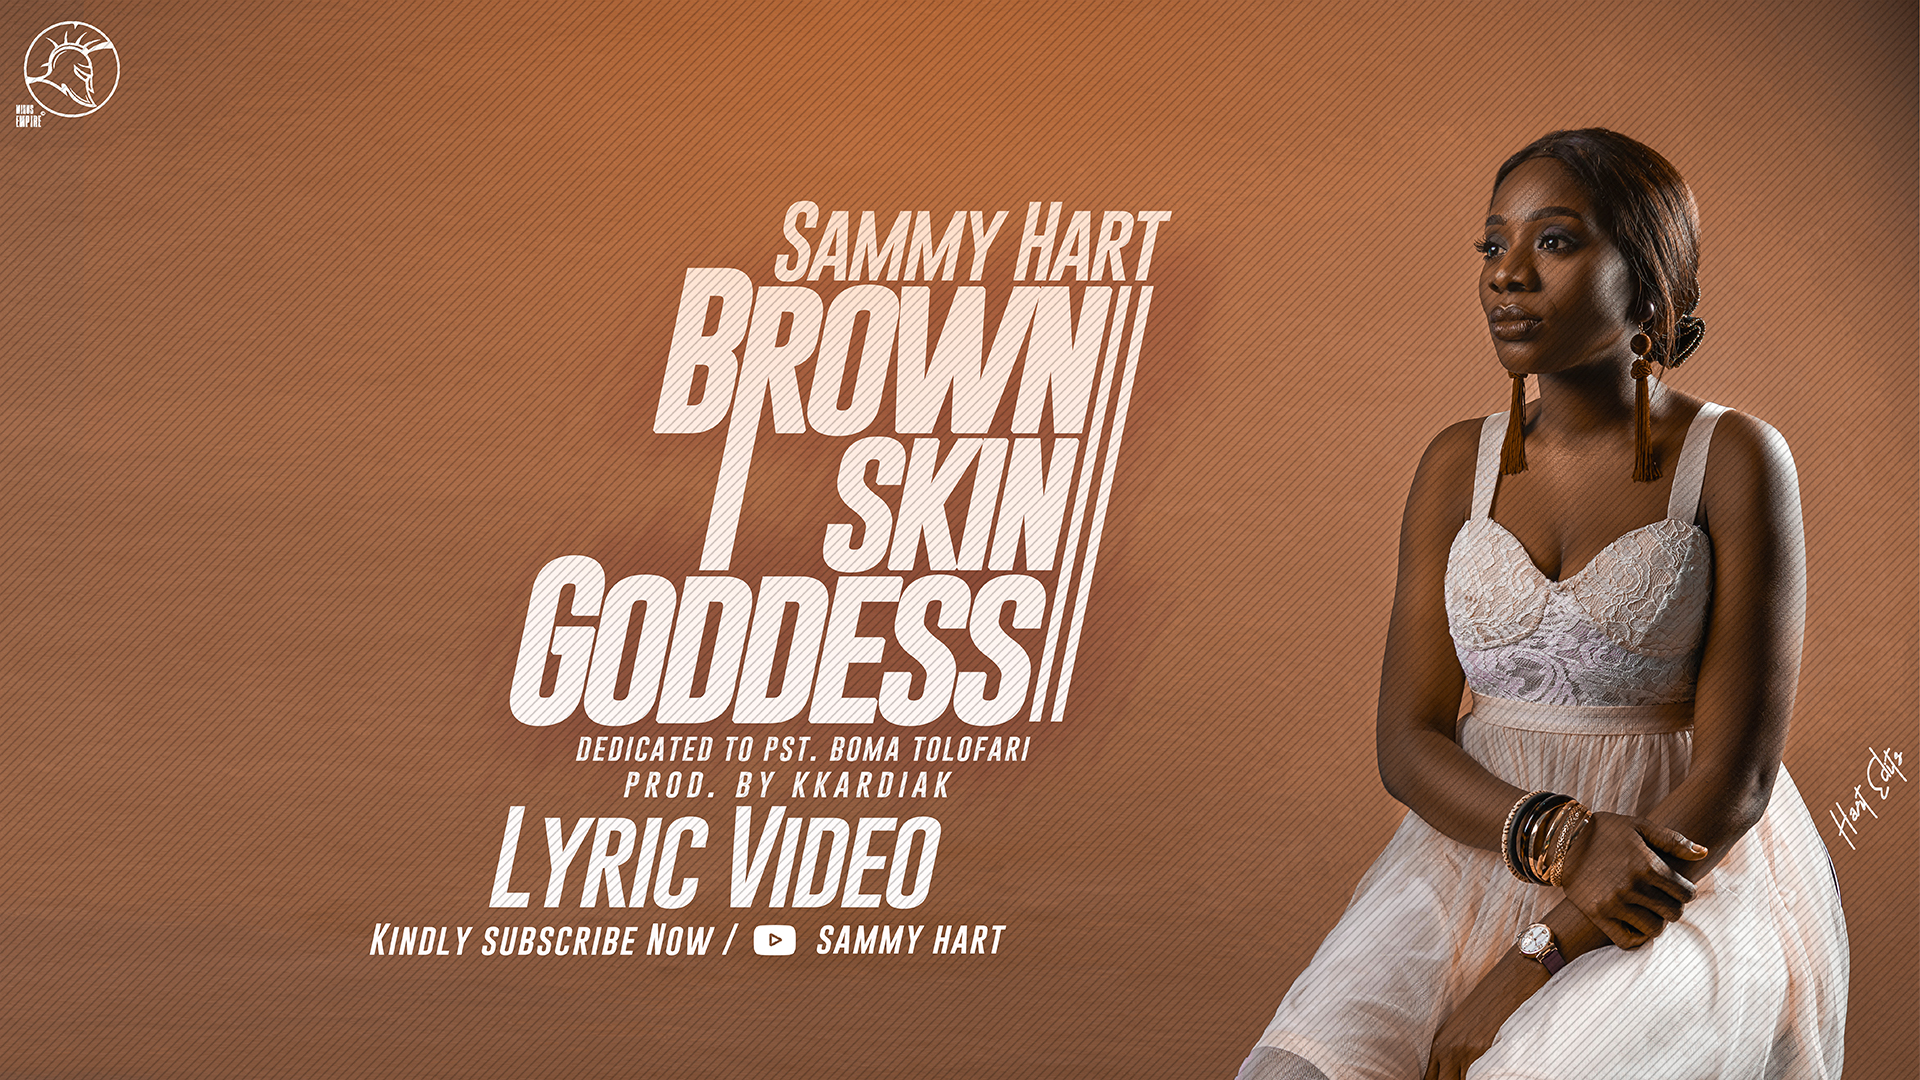 NEW MUSIC: Brown Skin Goddess by Sammy hart - Mirus Empire Gist